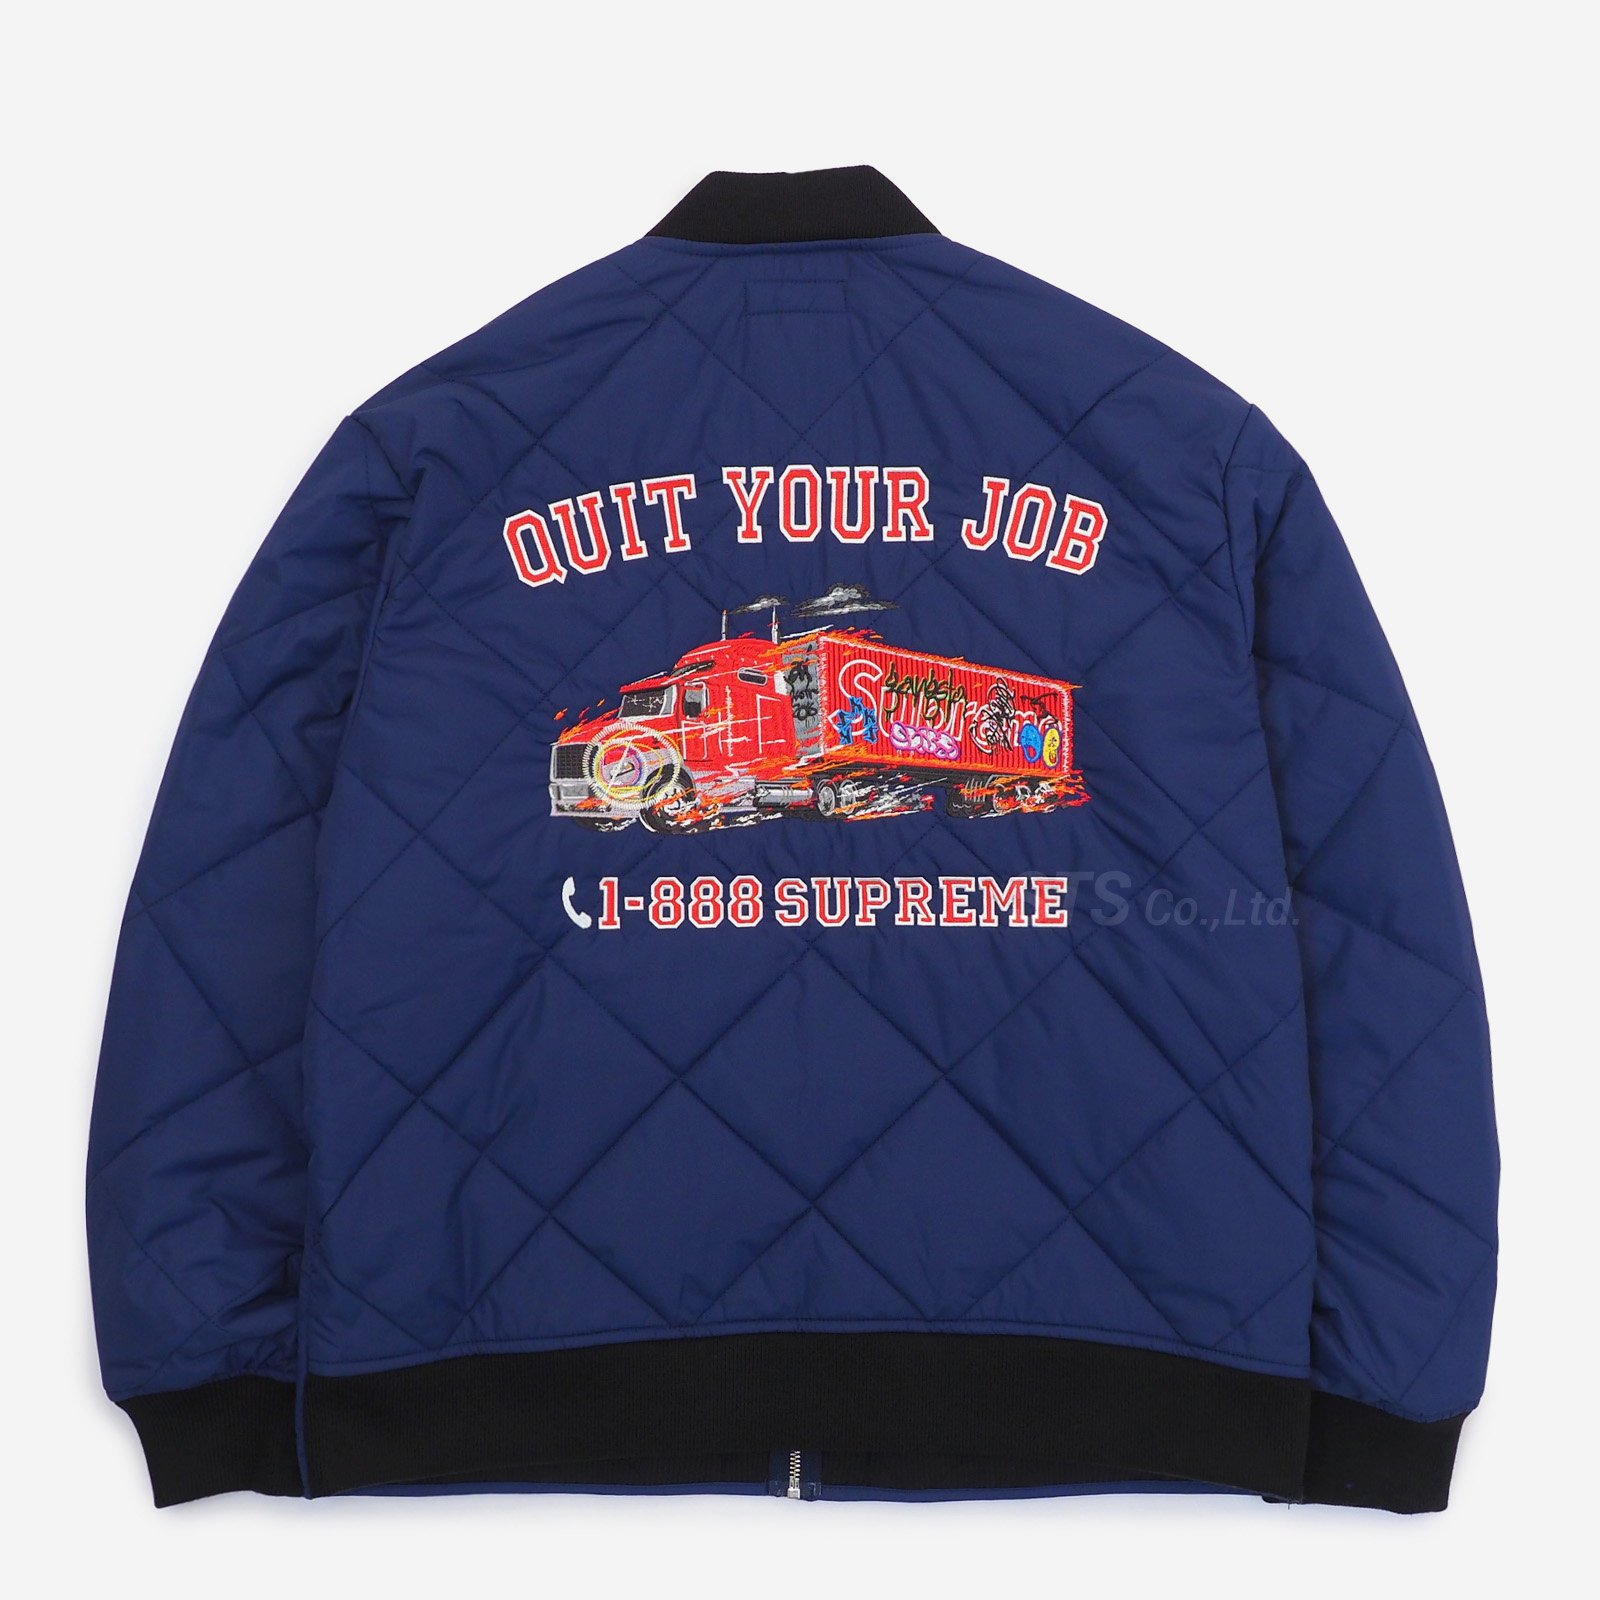 Supreme - Quit Your Job Quilted Work Jacket - ParkSIDER